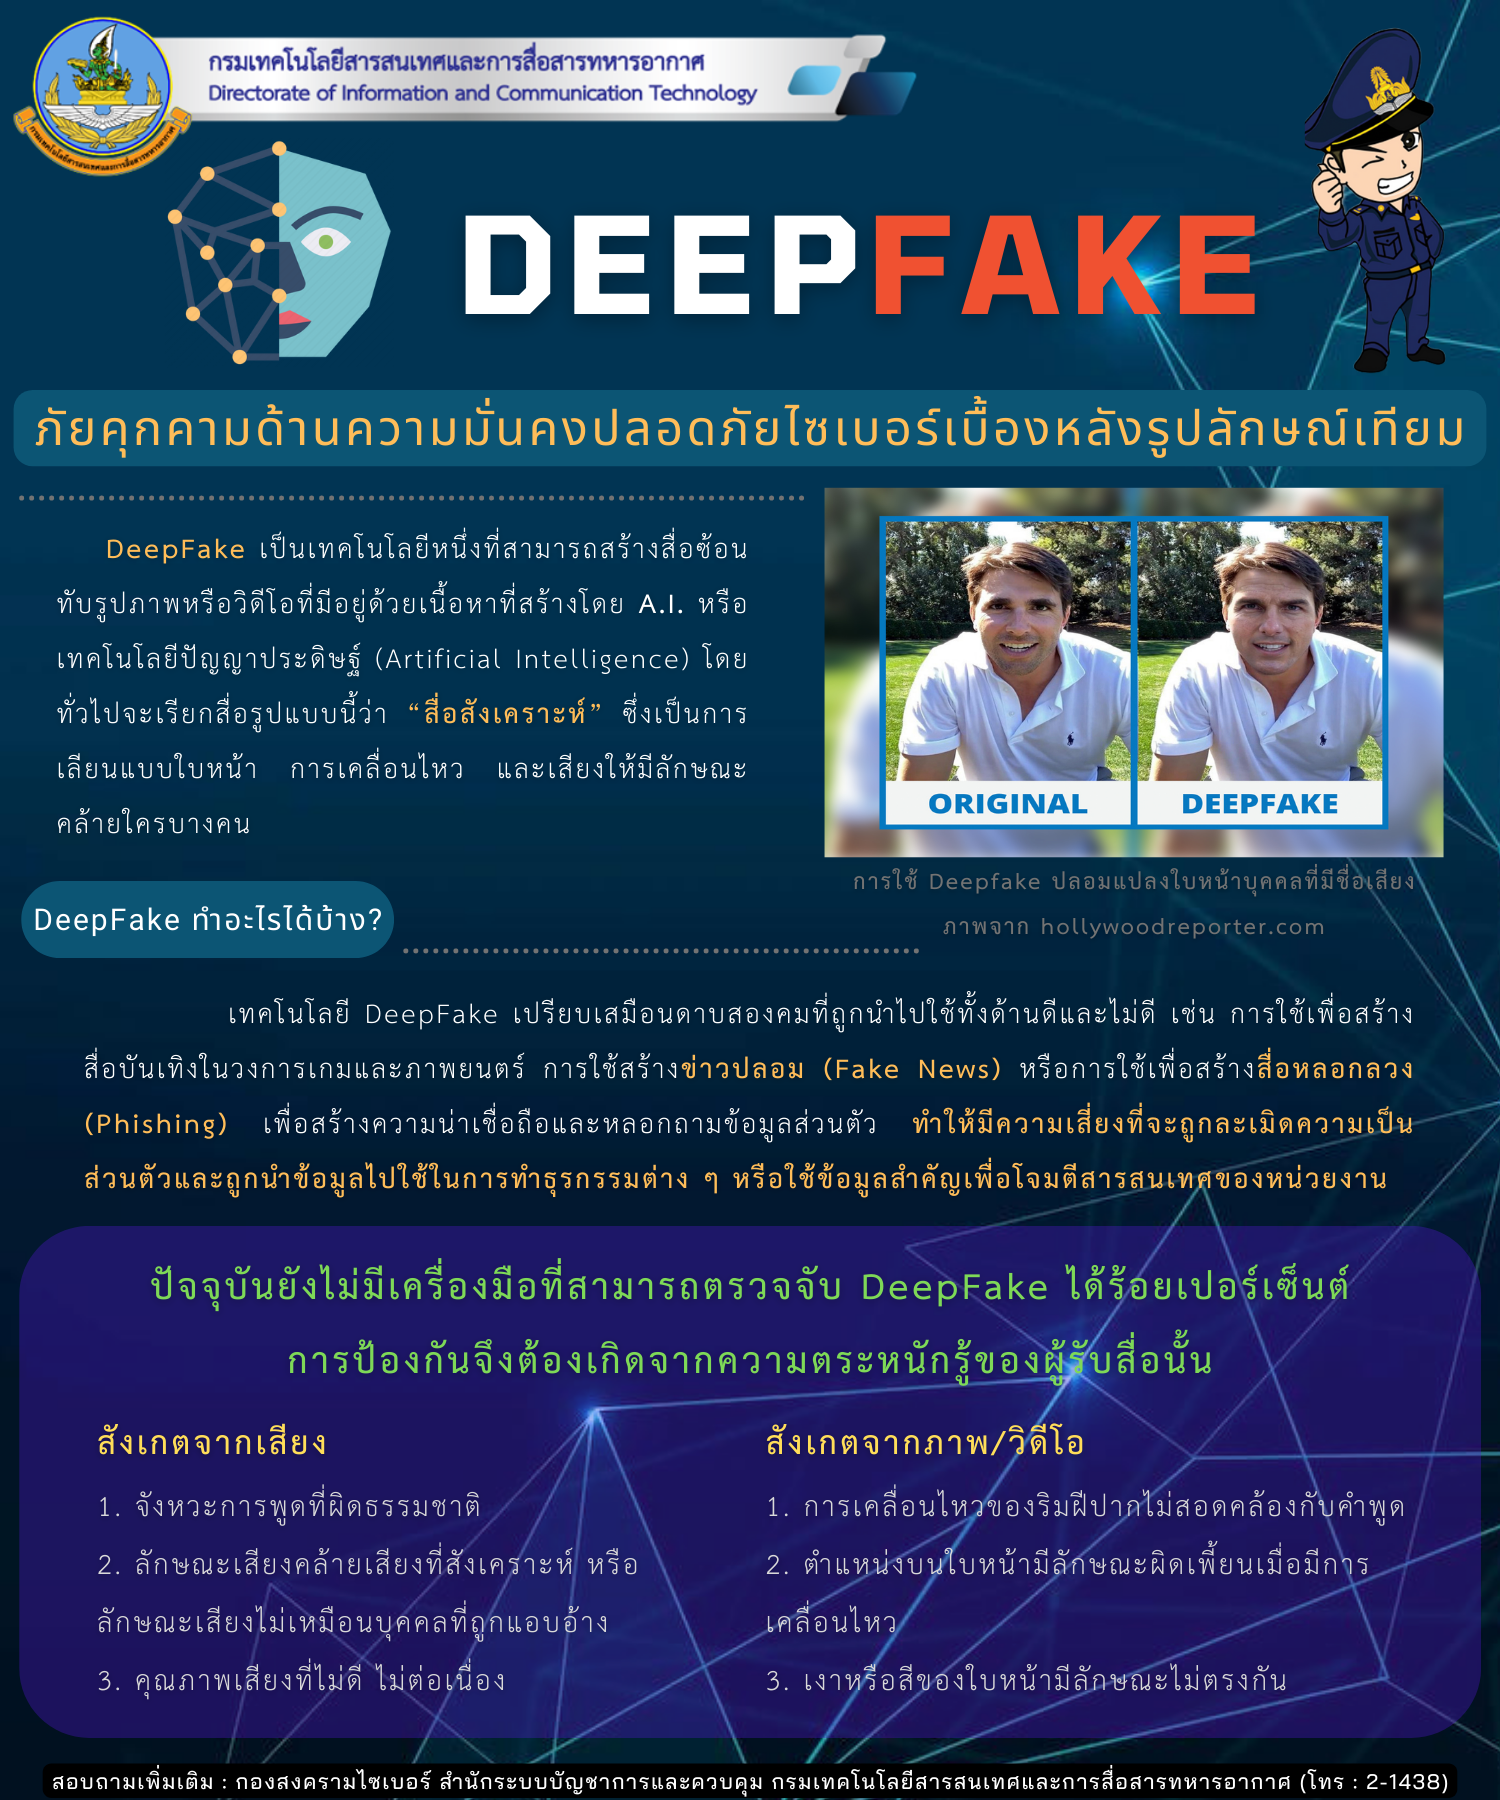 006 Deepfake